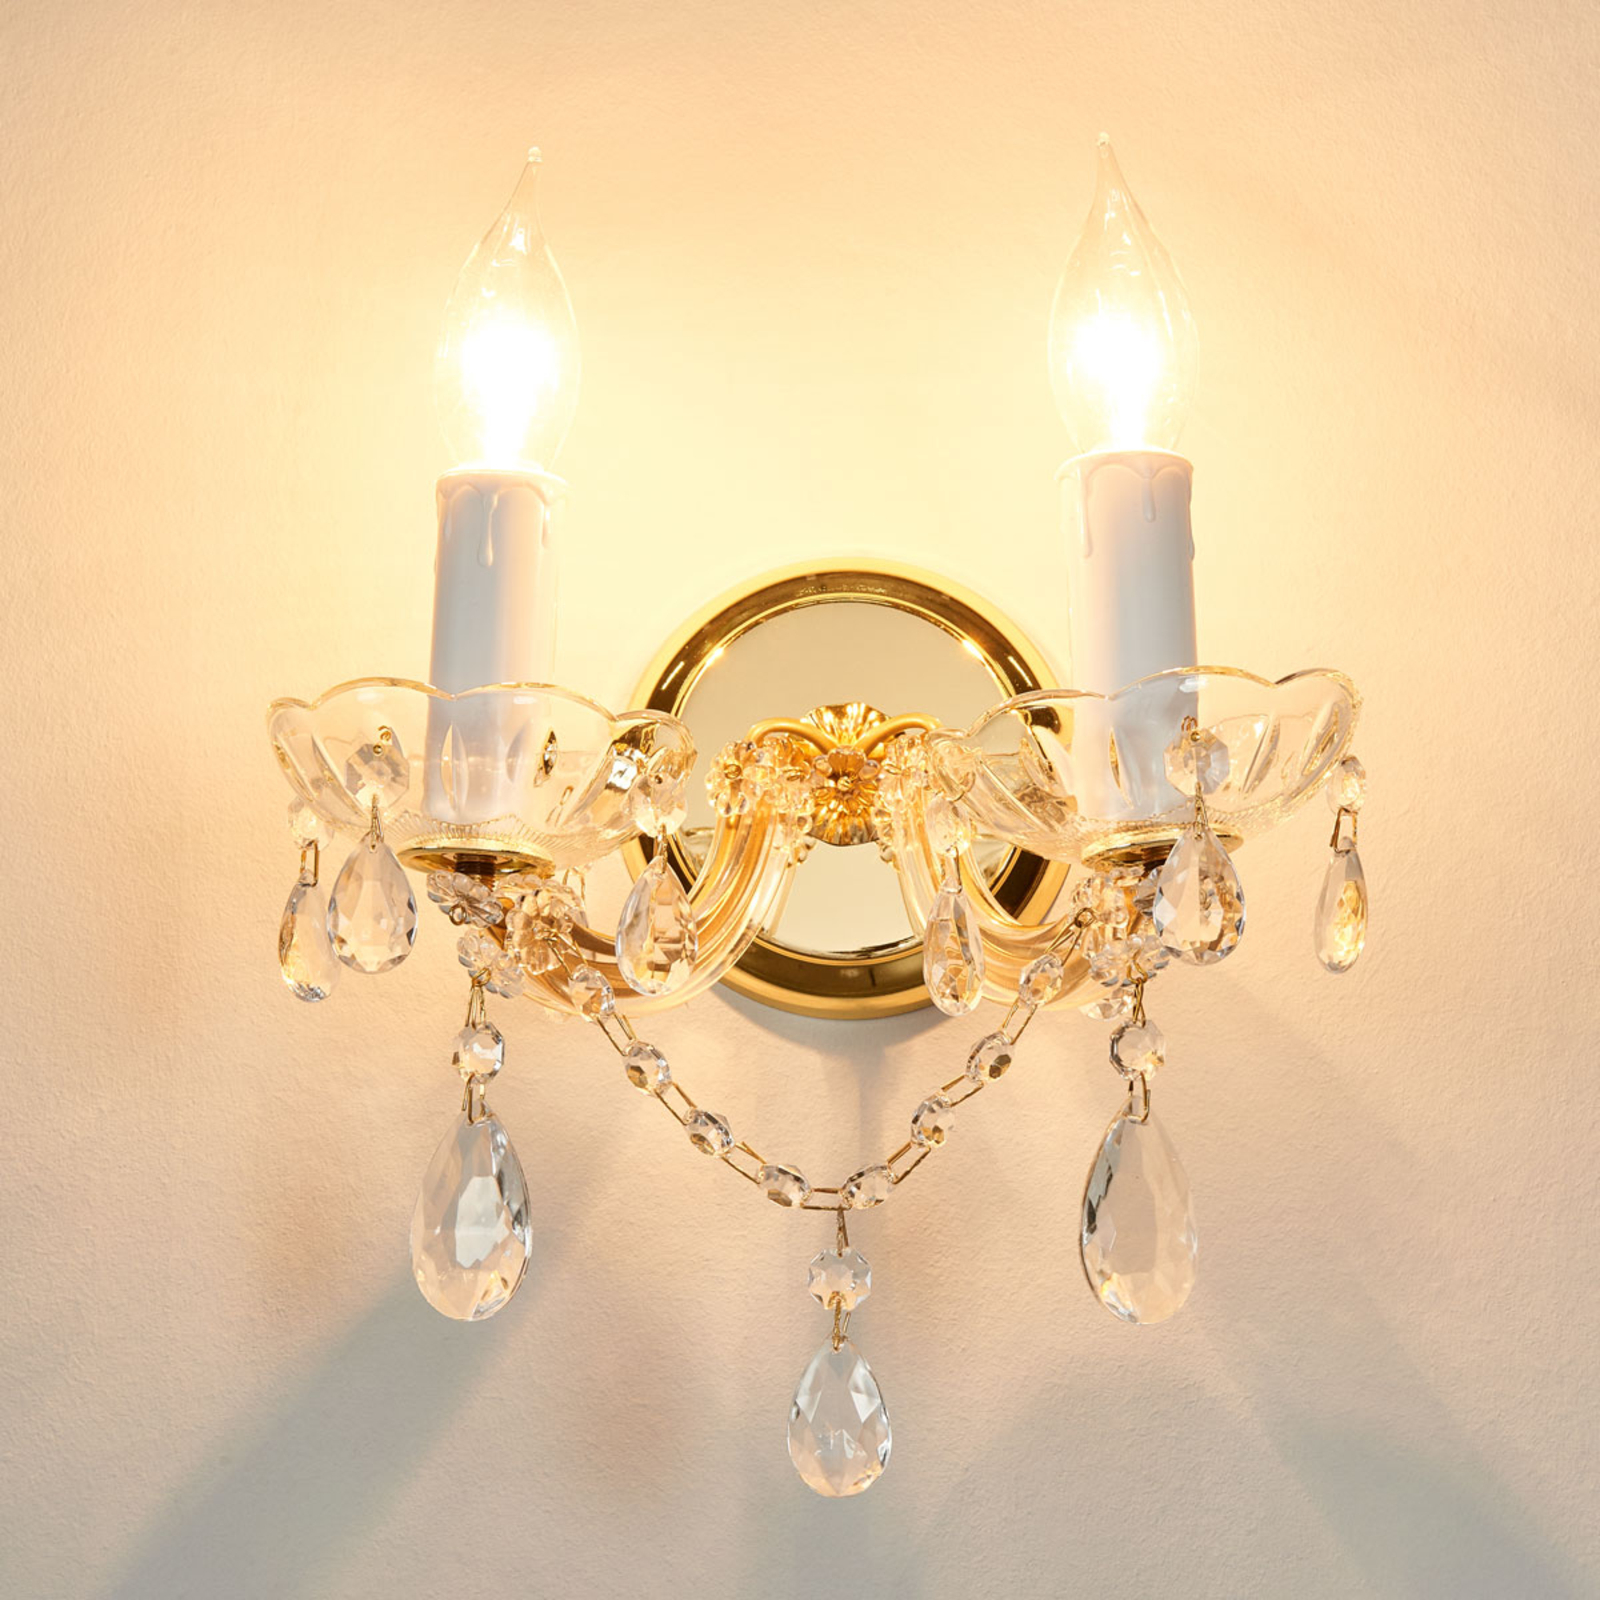 Wandlamp Dolores in kristallook, 2-lamps